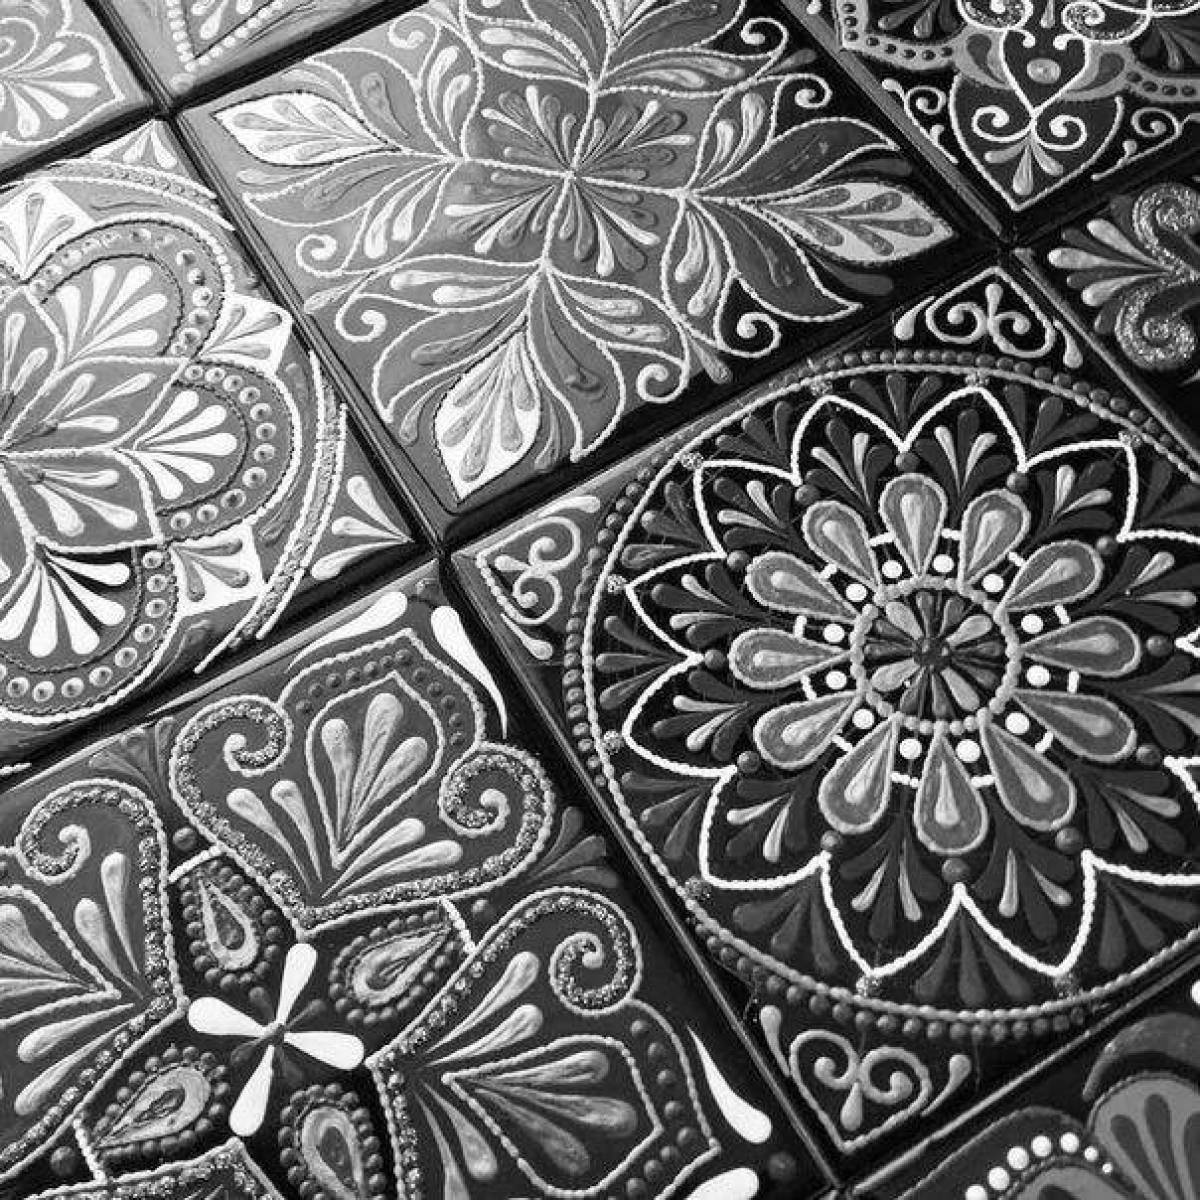 Fun ceramic tile coloring page